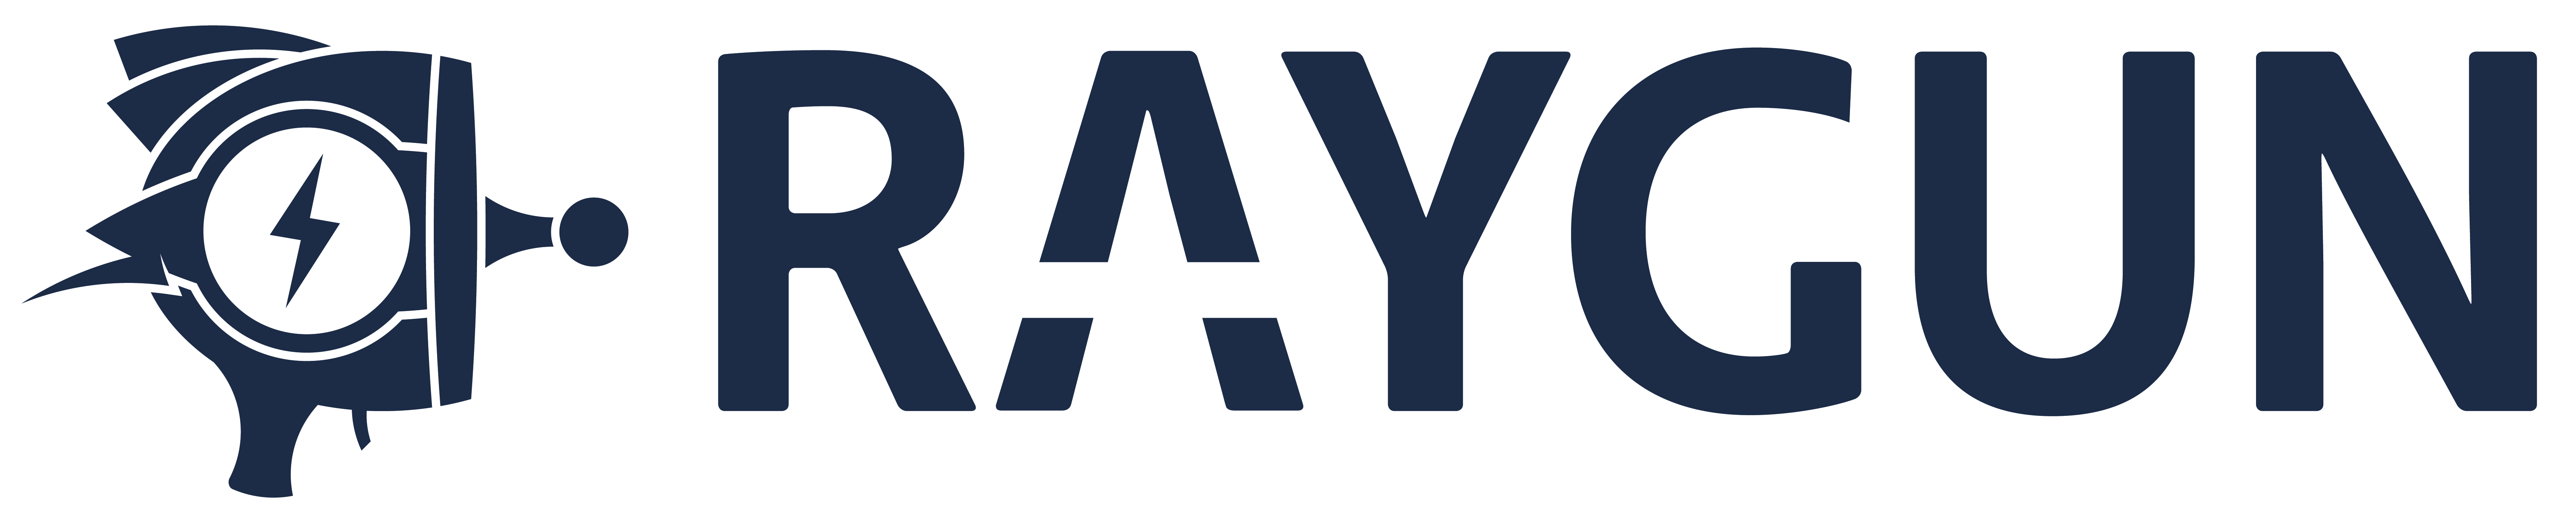 Raygun logo for Pivotal Tracker integration